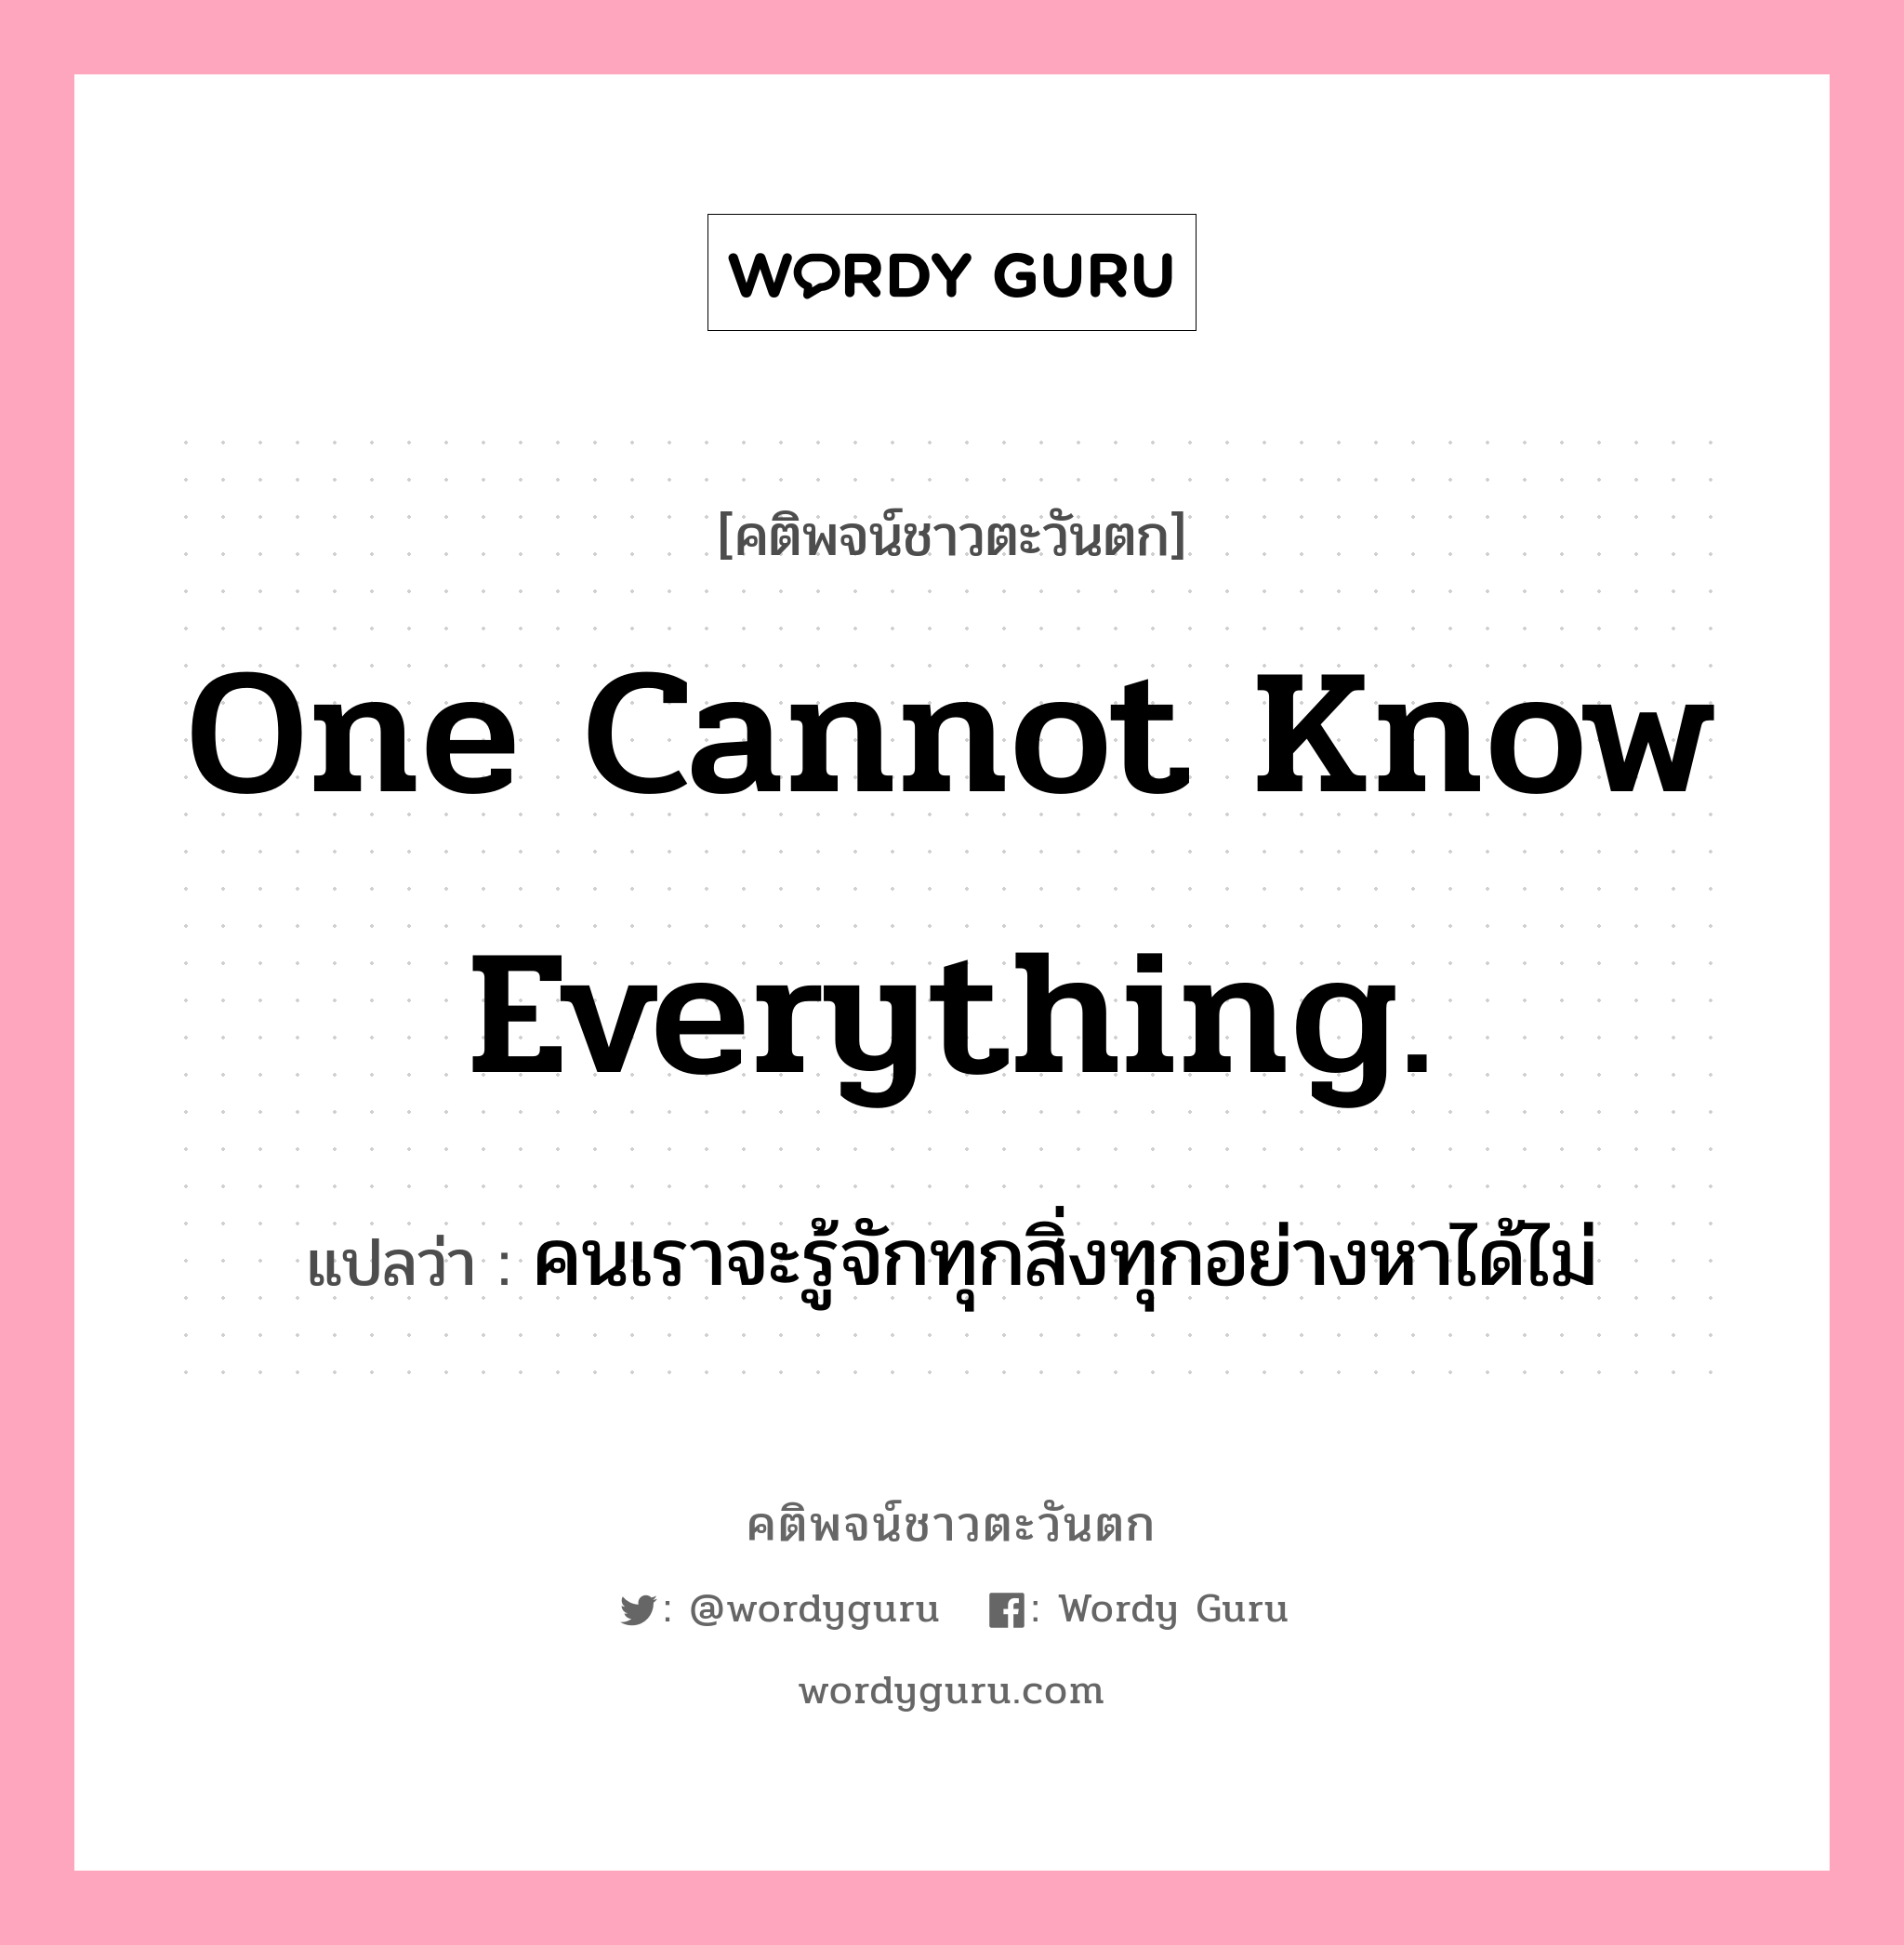 One cannot know everything., คติพจน์ชาวตะวันตก One cannot know everything. แปลว่า คนเราจะรู้จักทุกสิ่งทุกอย่างหาได้ไม่